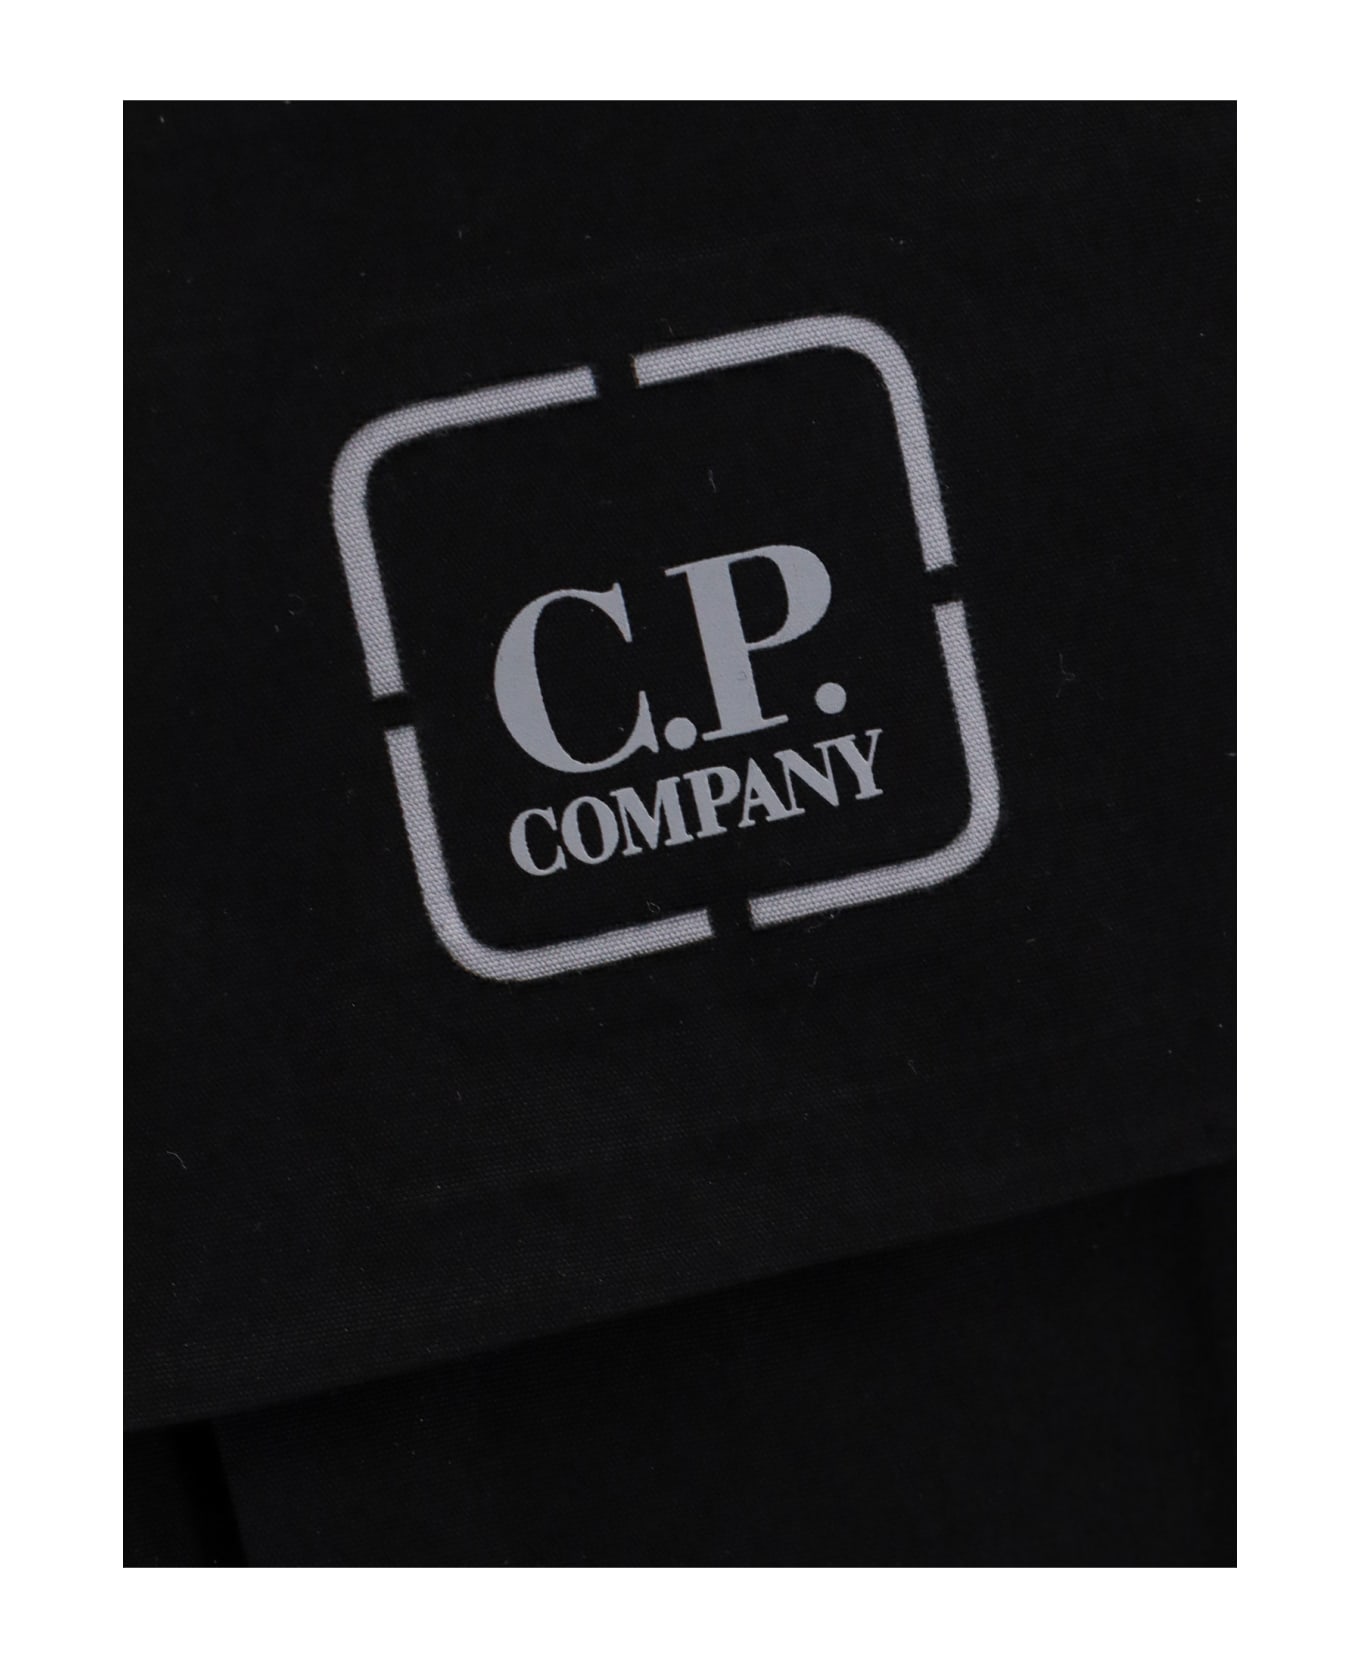 C.P. Company Jacket - Black ジャケット